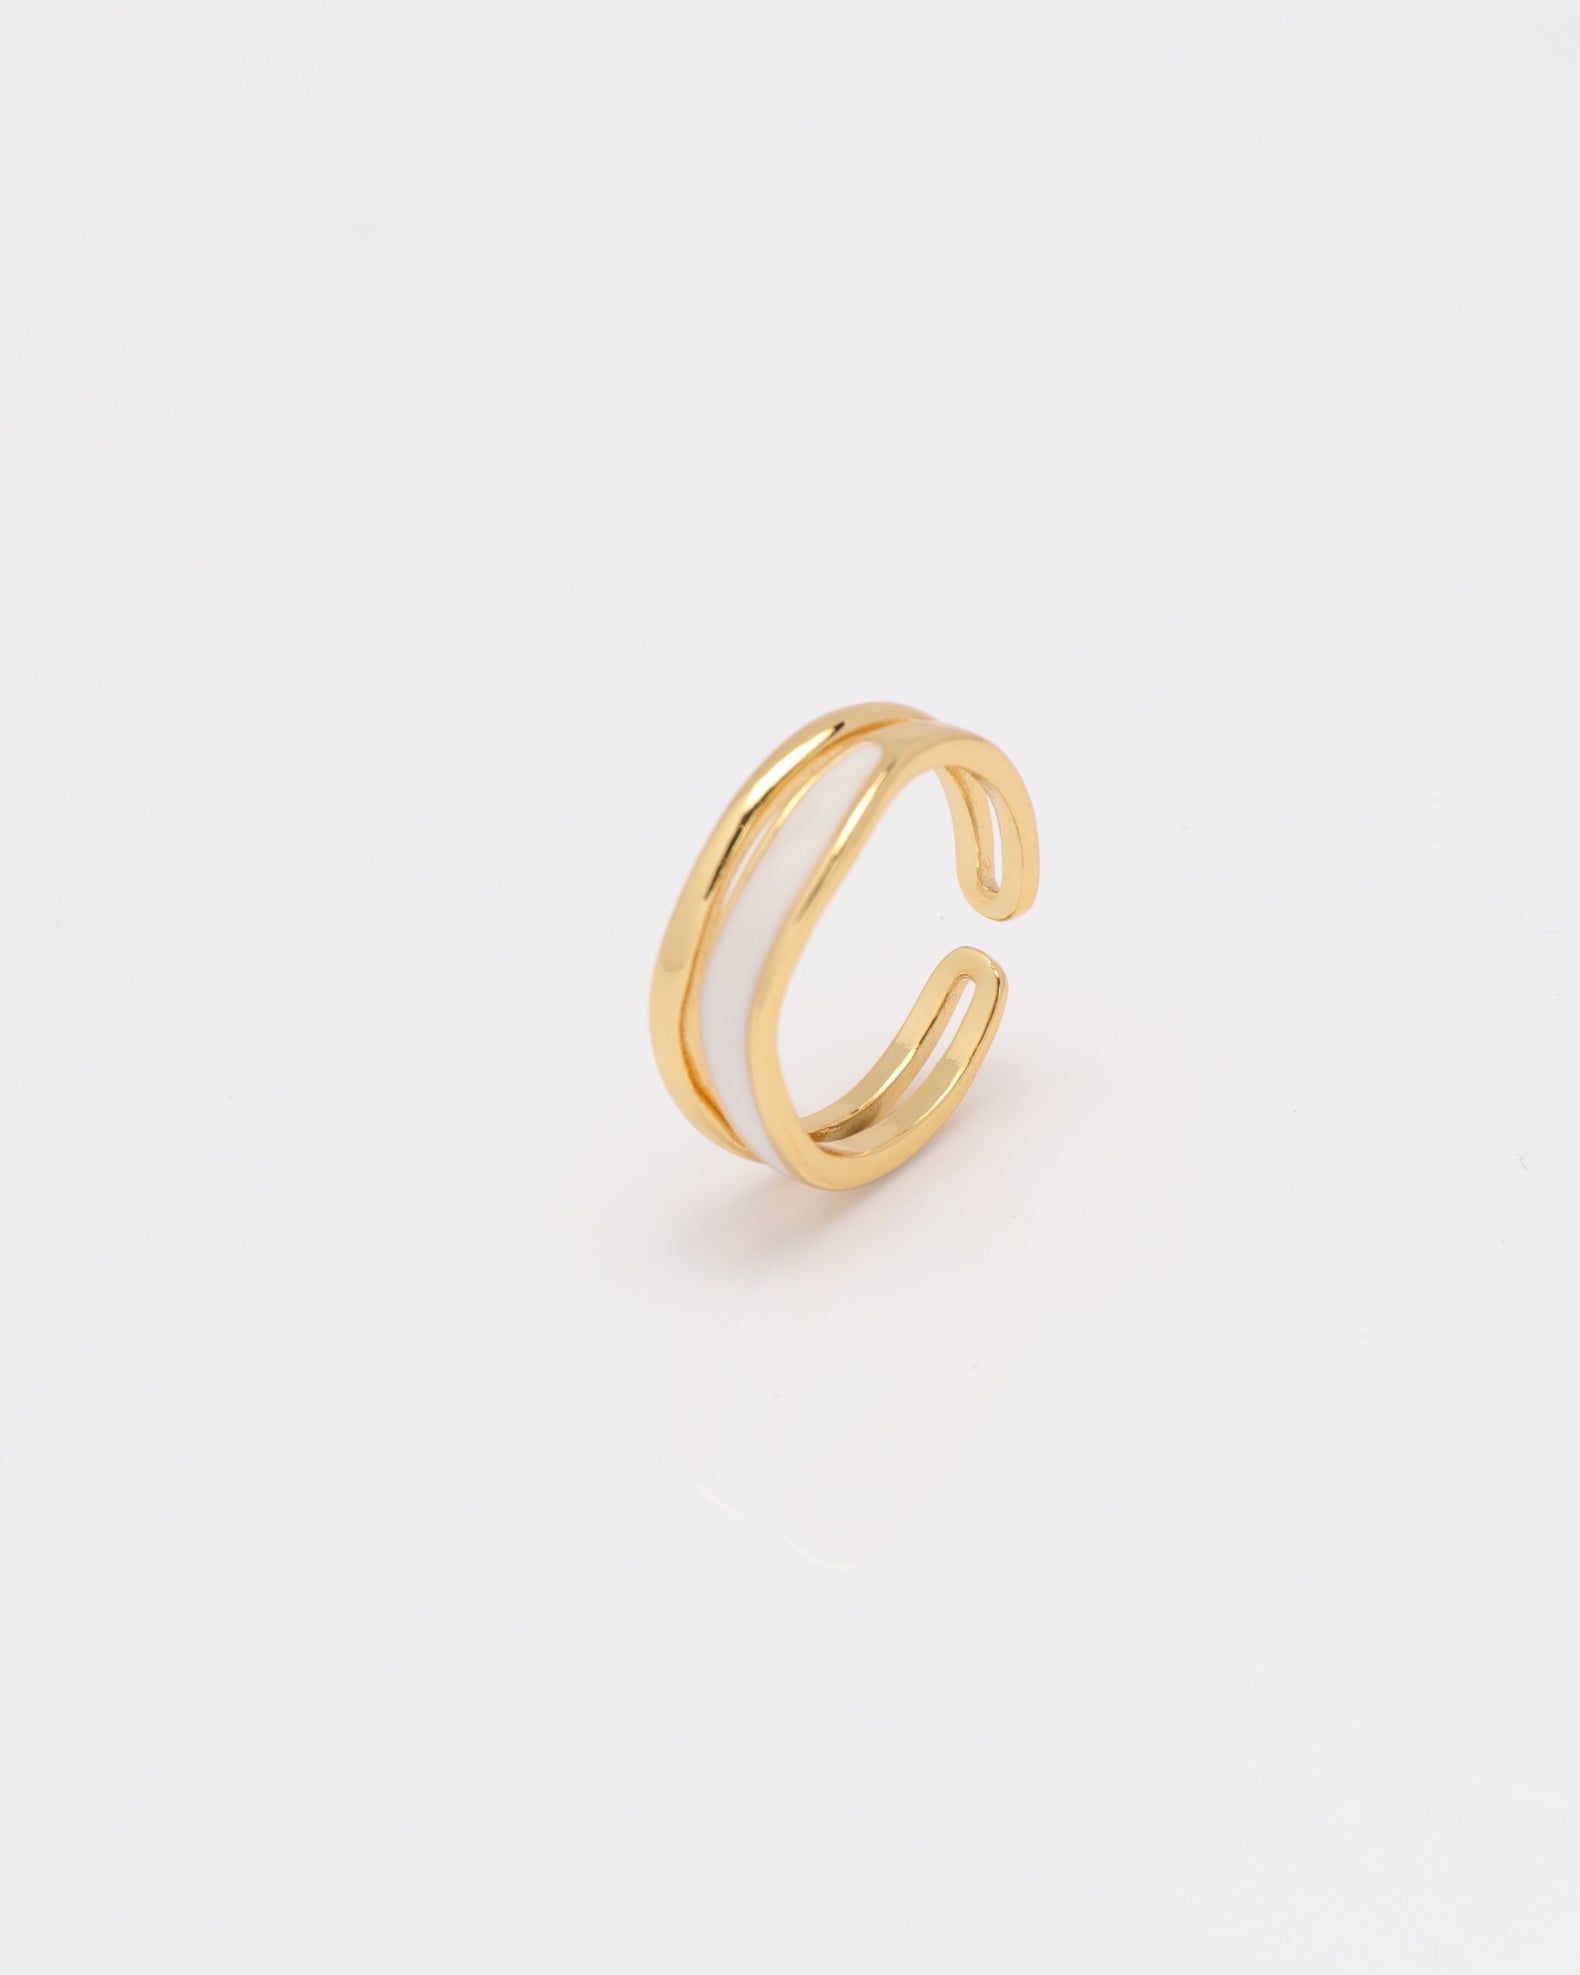 Mira Gold and White Ring